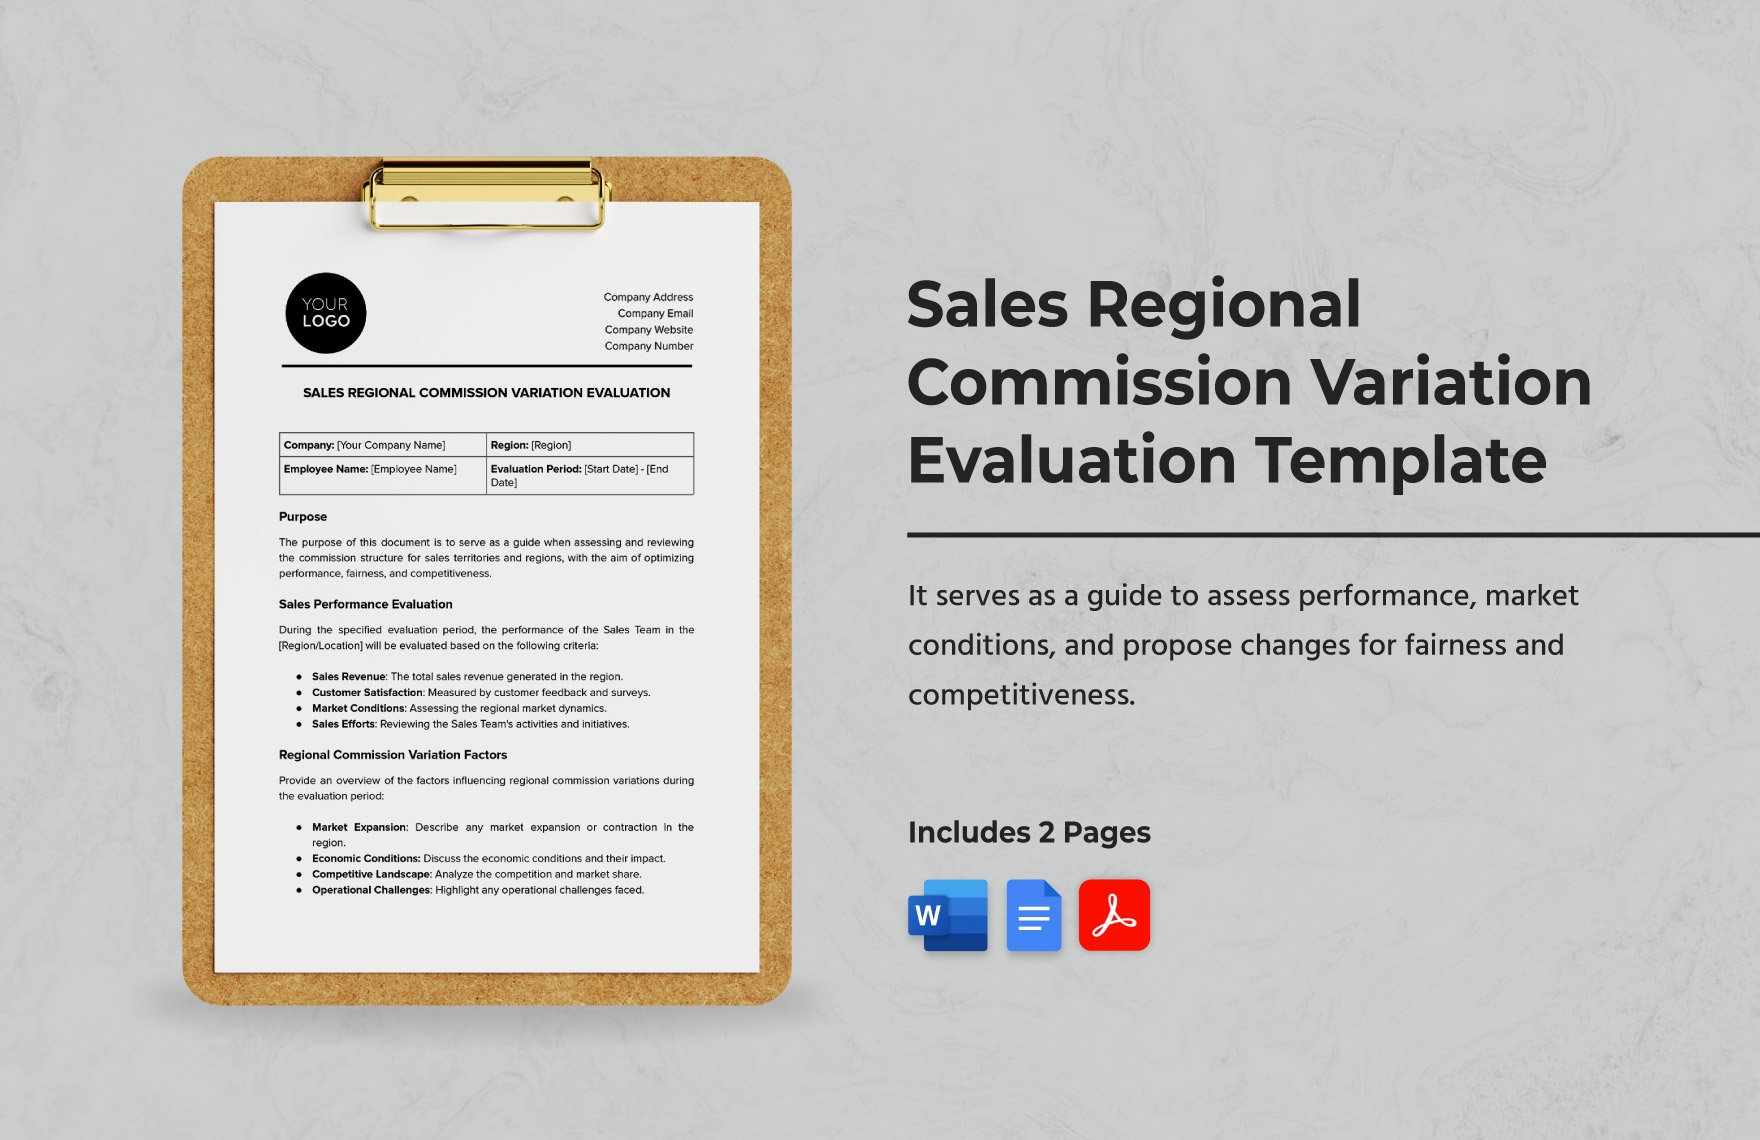 Sales Regional Commission Variation Evaluation Template